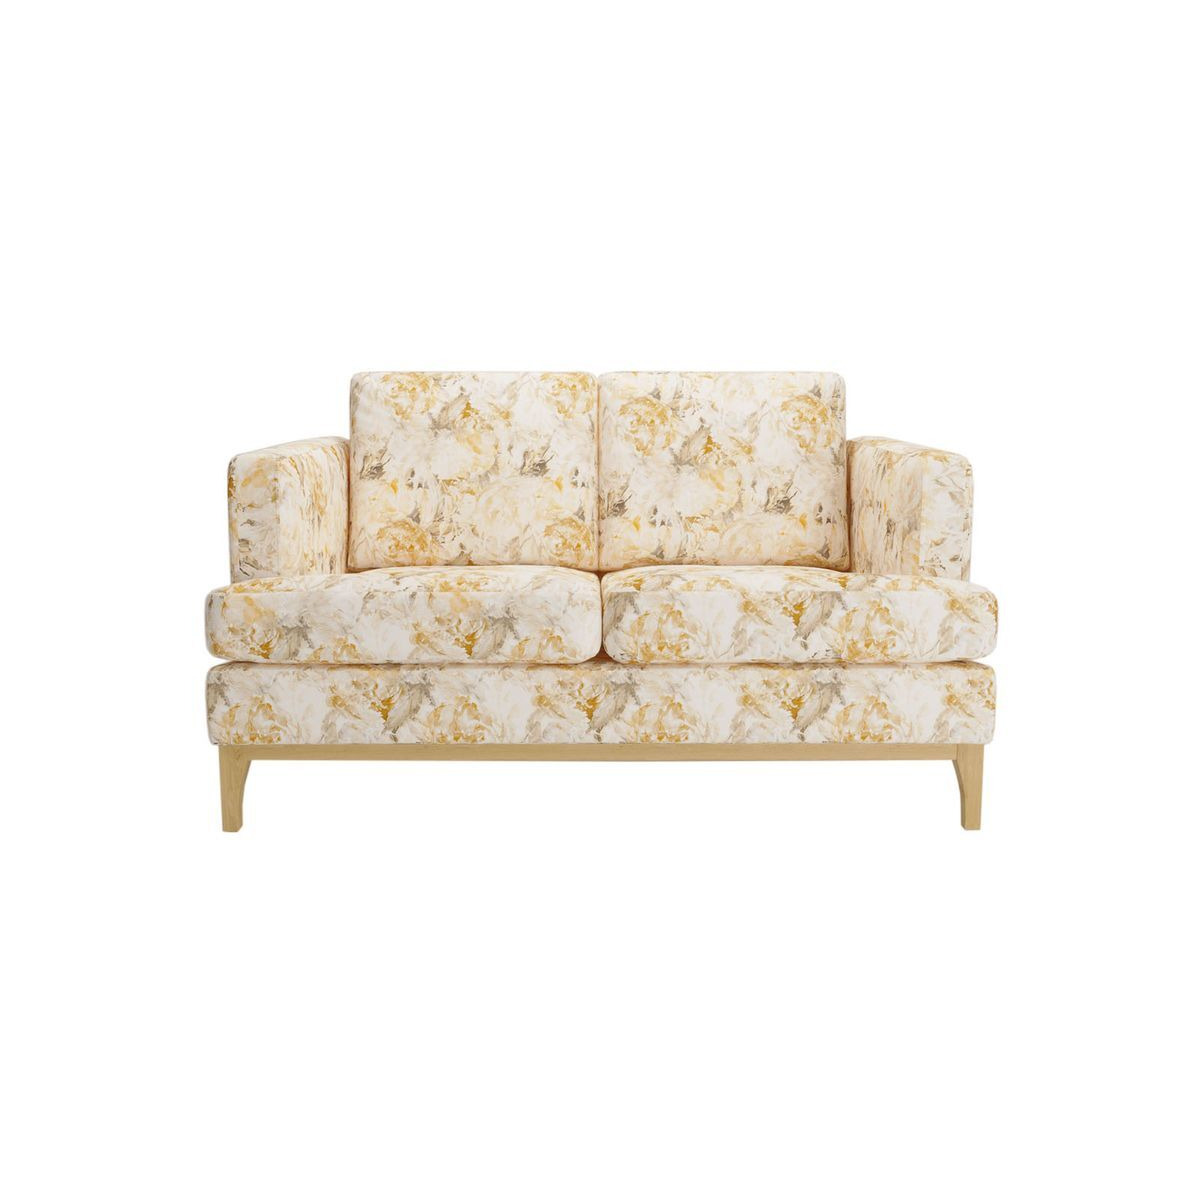 Scarlett Design 2 Seater Sofa, cream, Leg colour: like oak - image 1